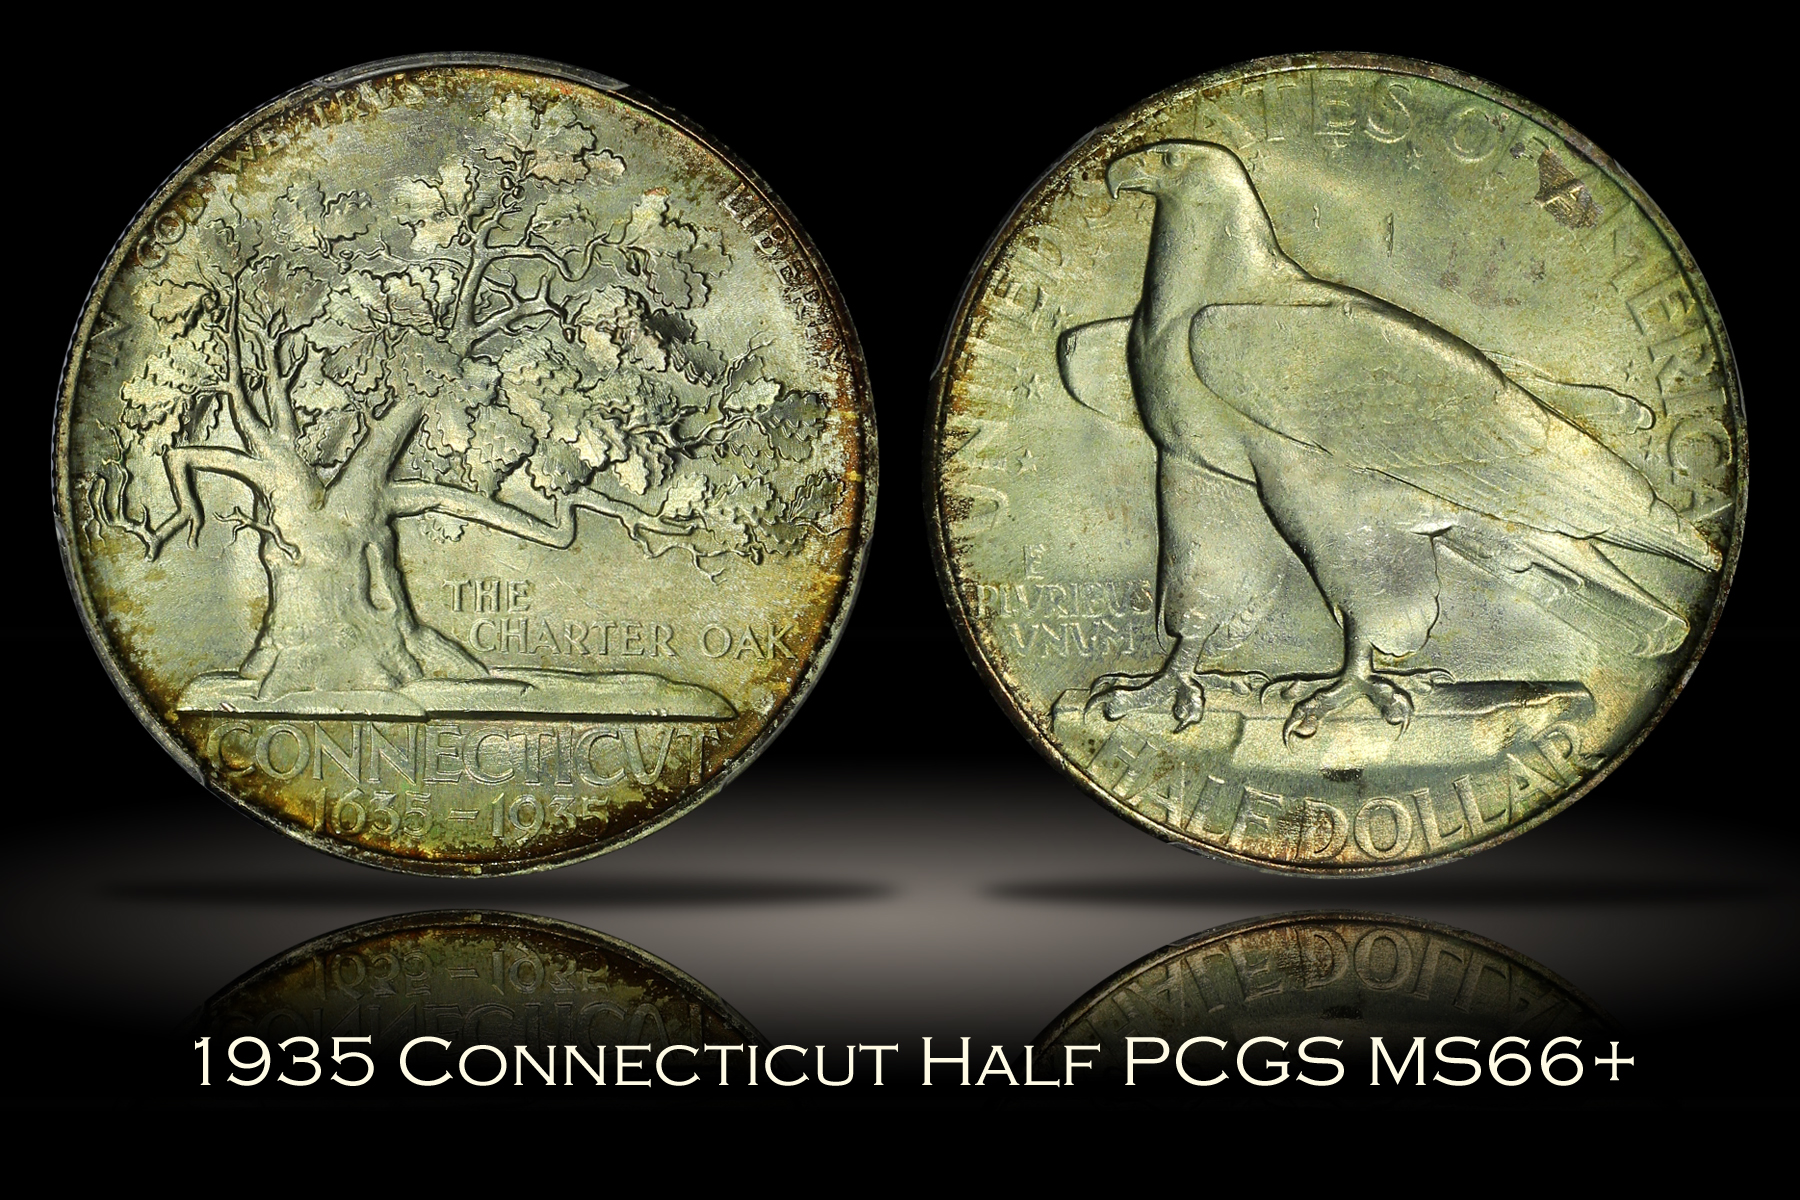 1935 Connecticut Half PCGS MS66+